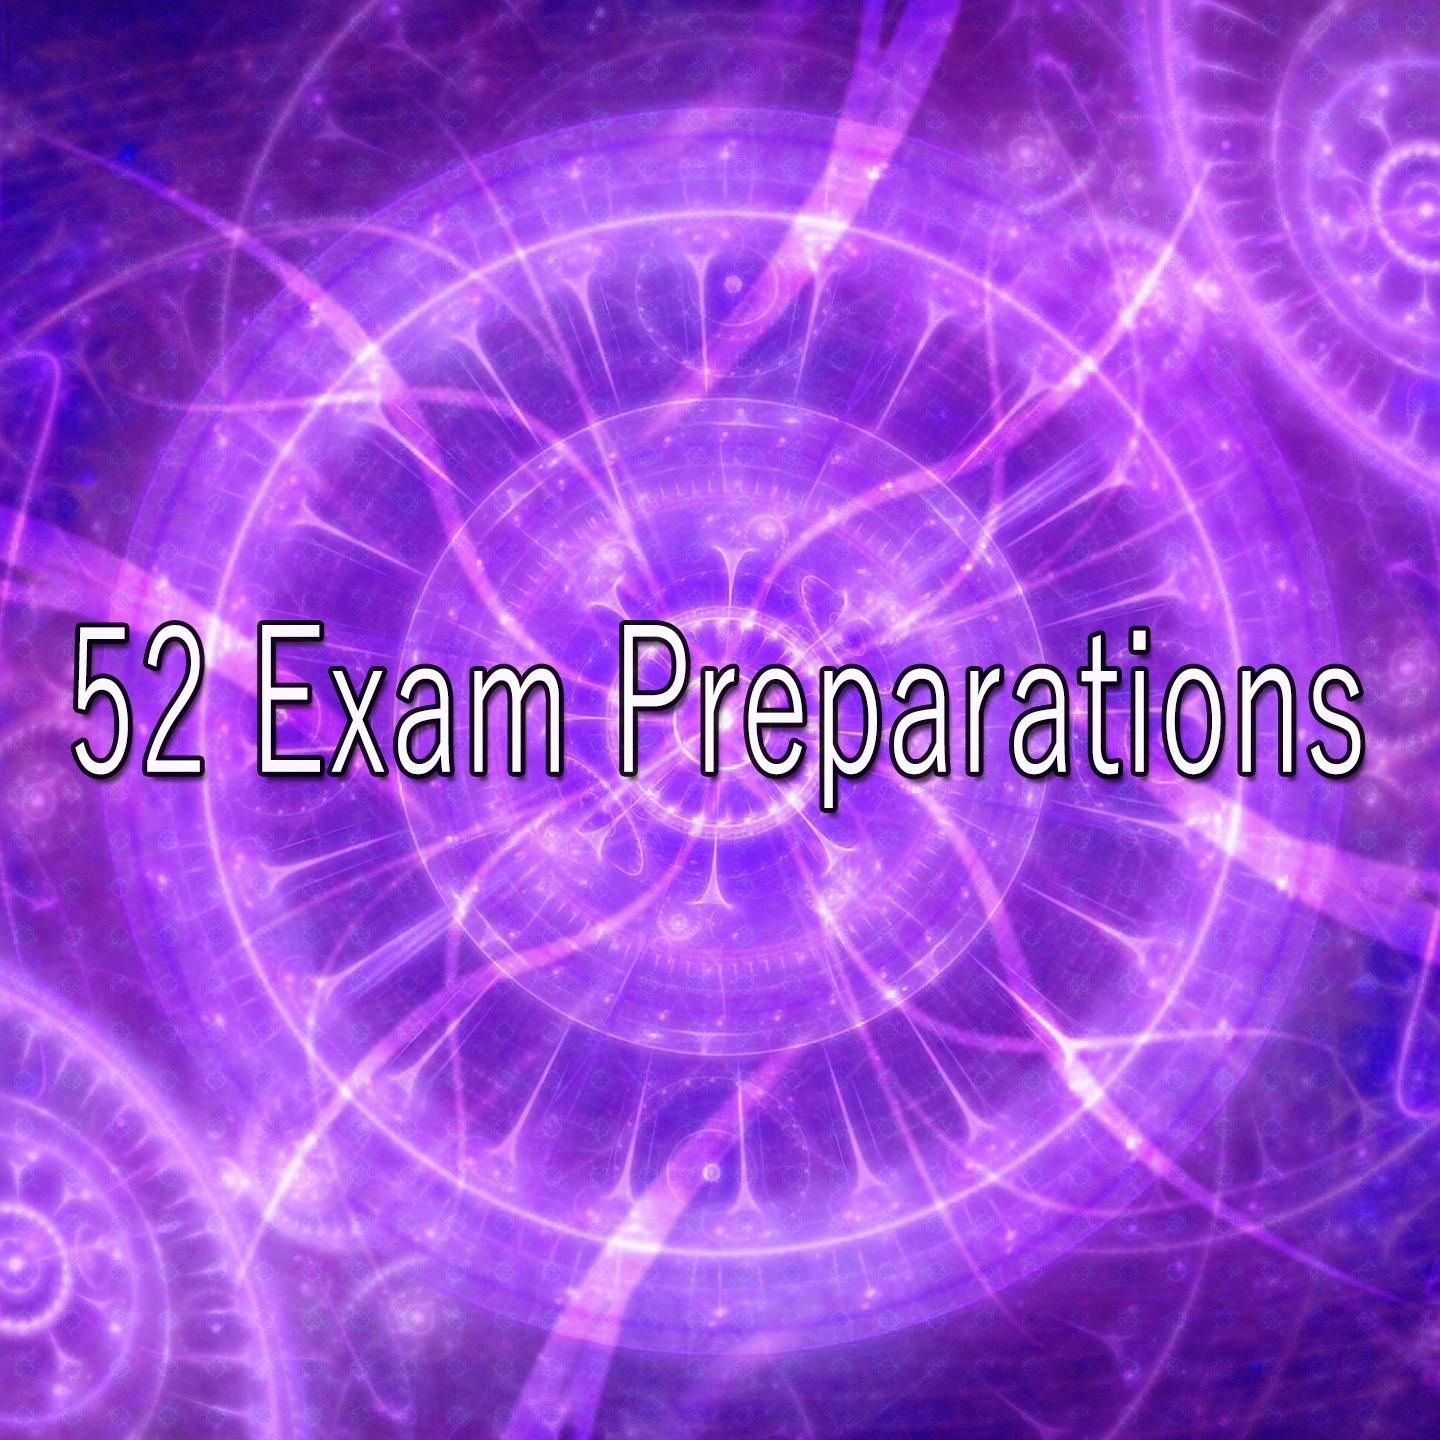 52 Exam Preparations